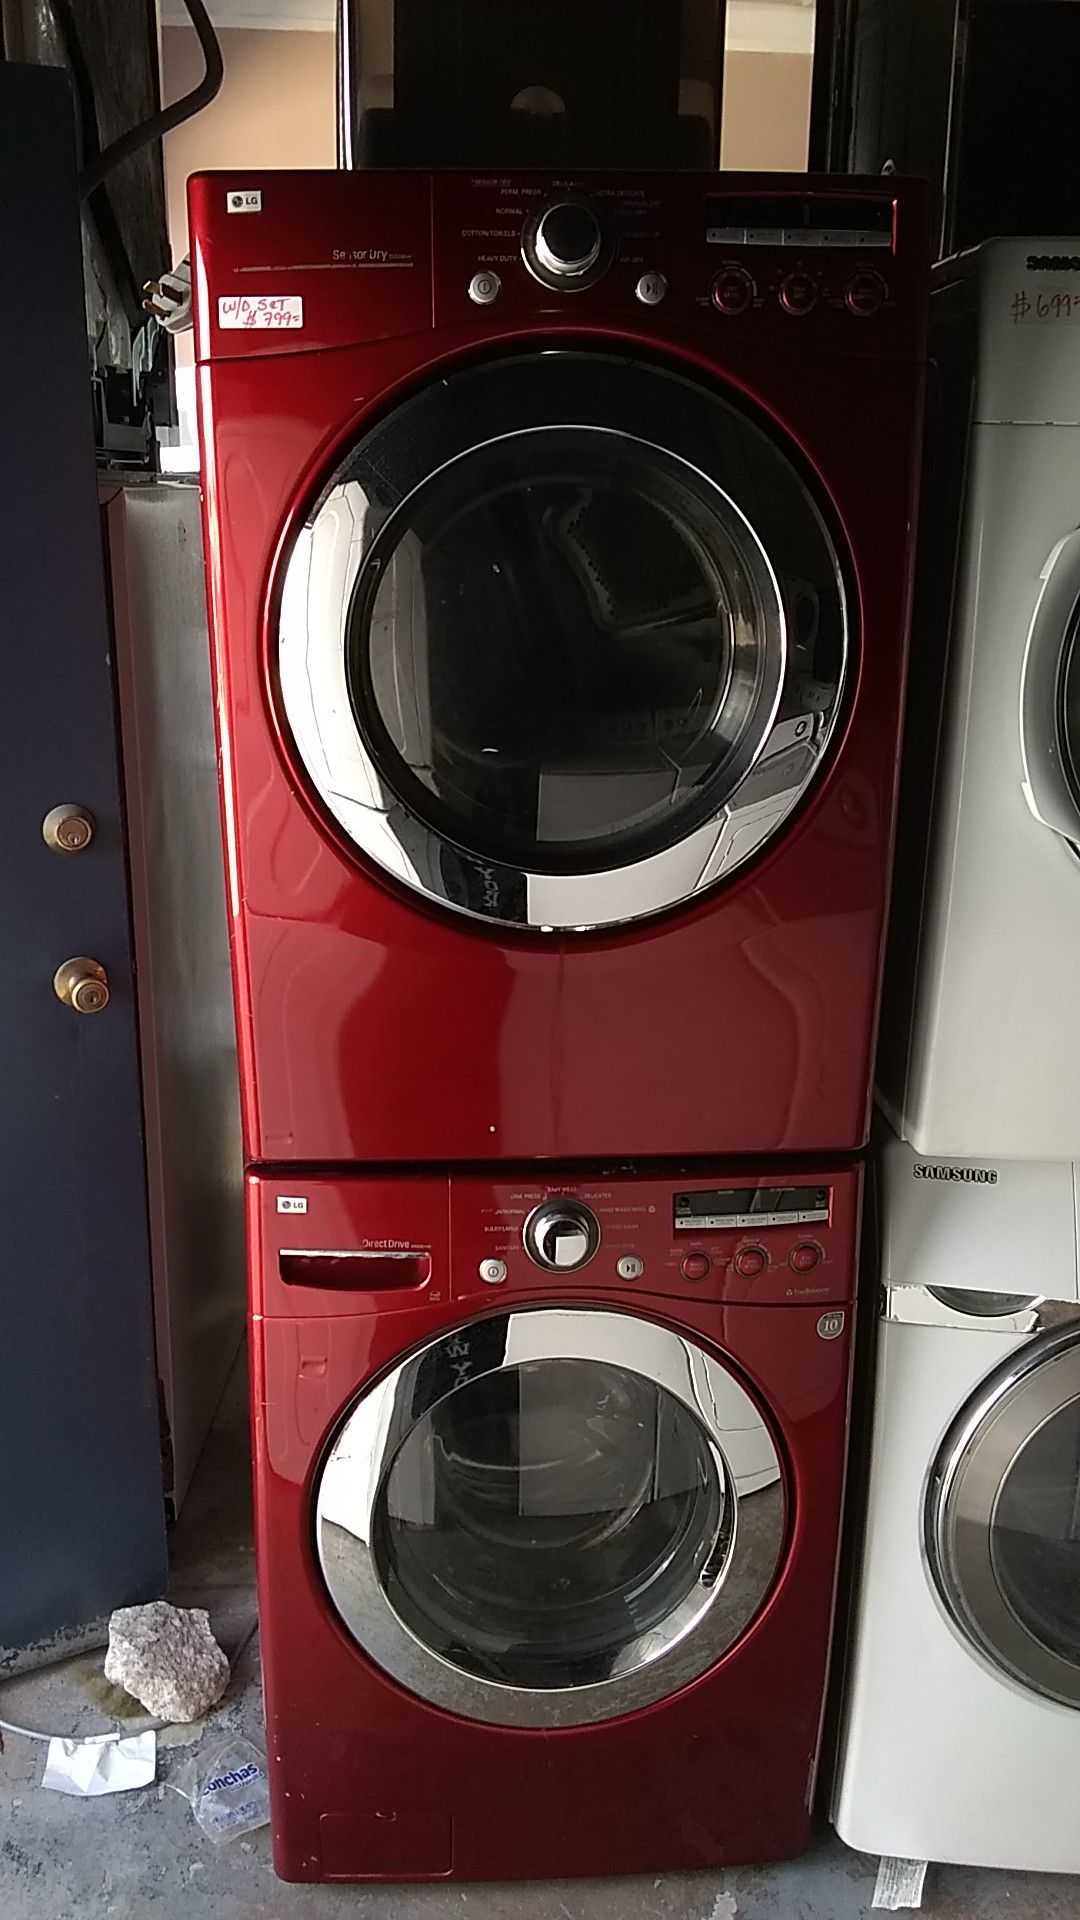 RED LG Washer and dryer Set front loader 🤗